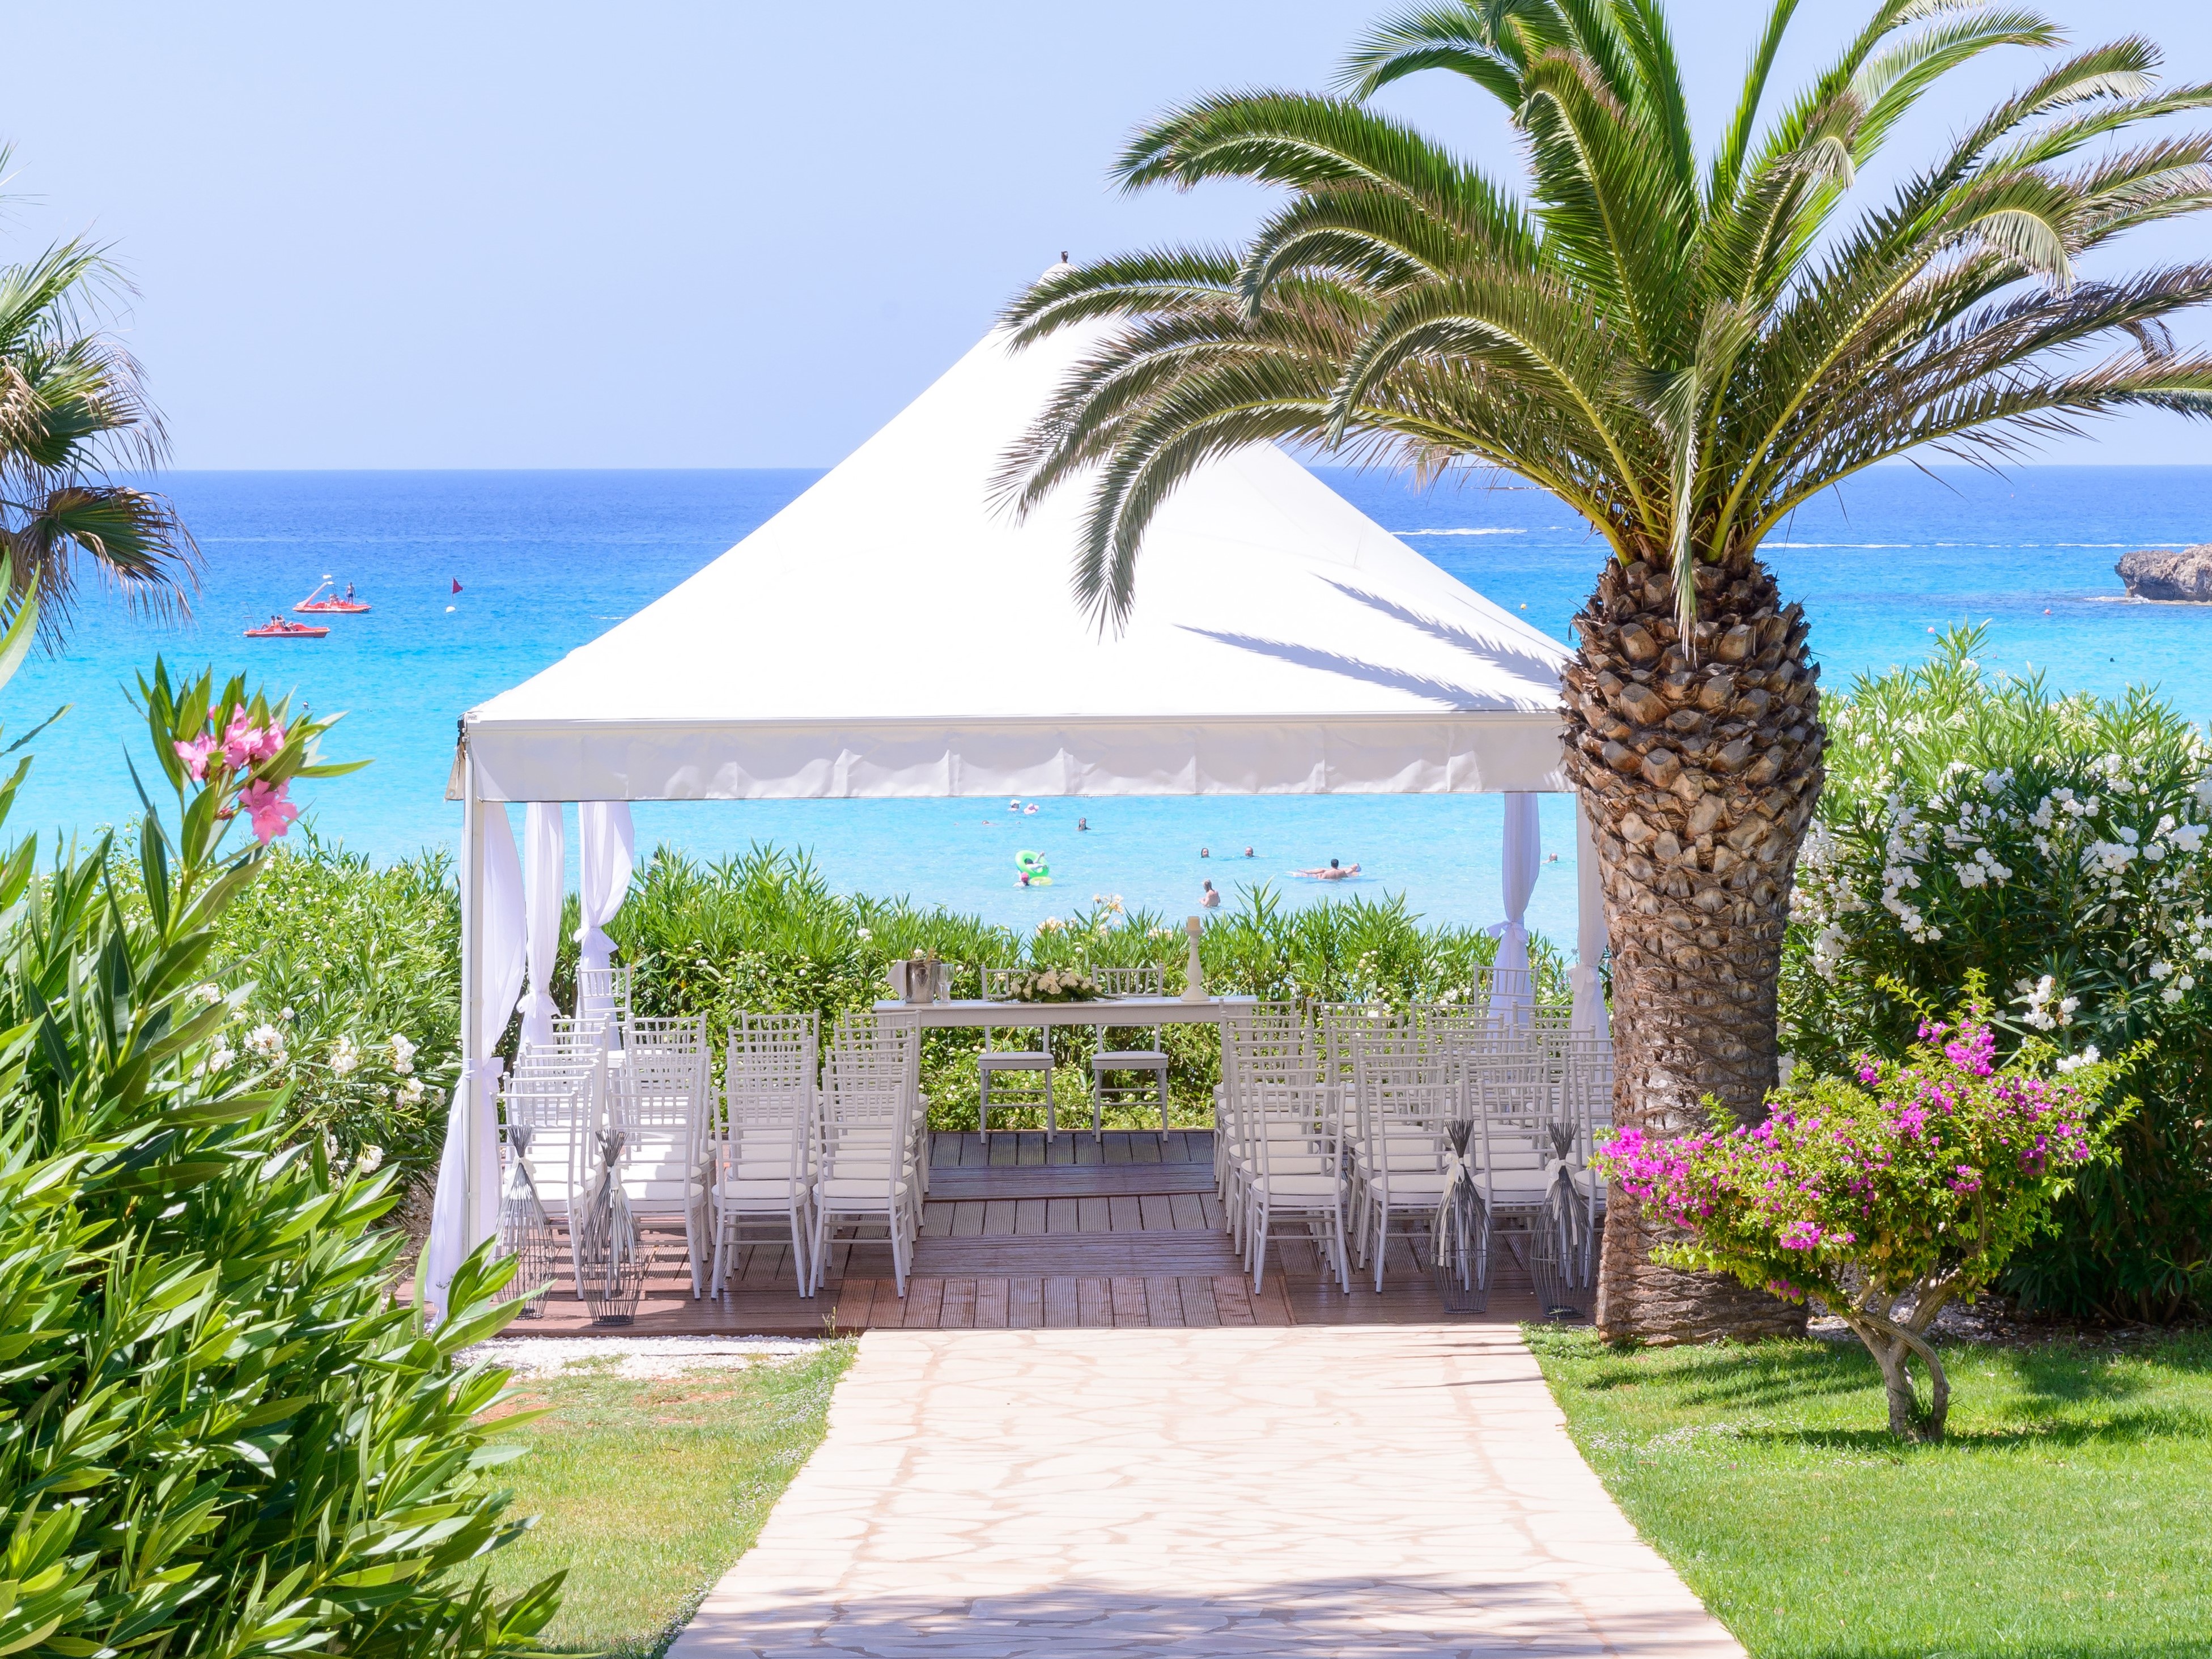 Nissi Beach Resort Jude Blackmore Cyprus Weddings Ltd